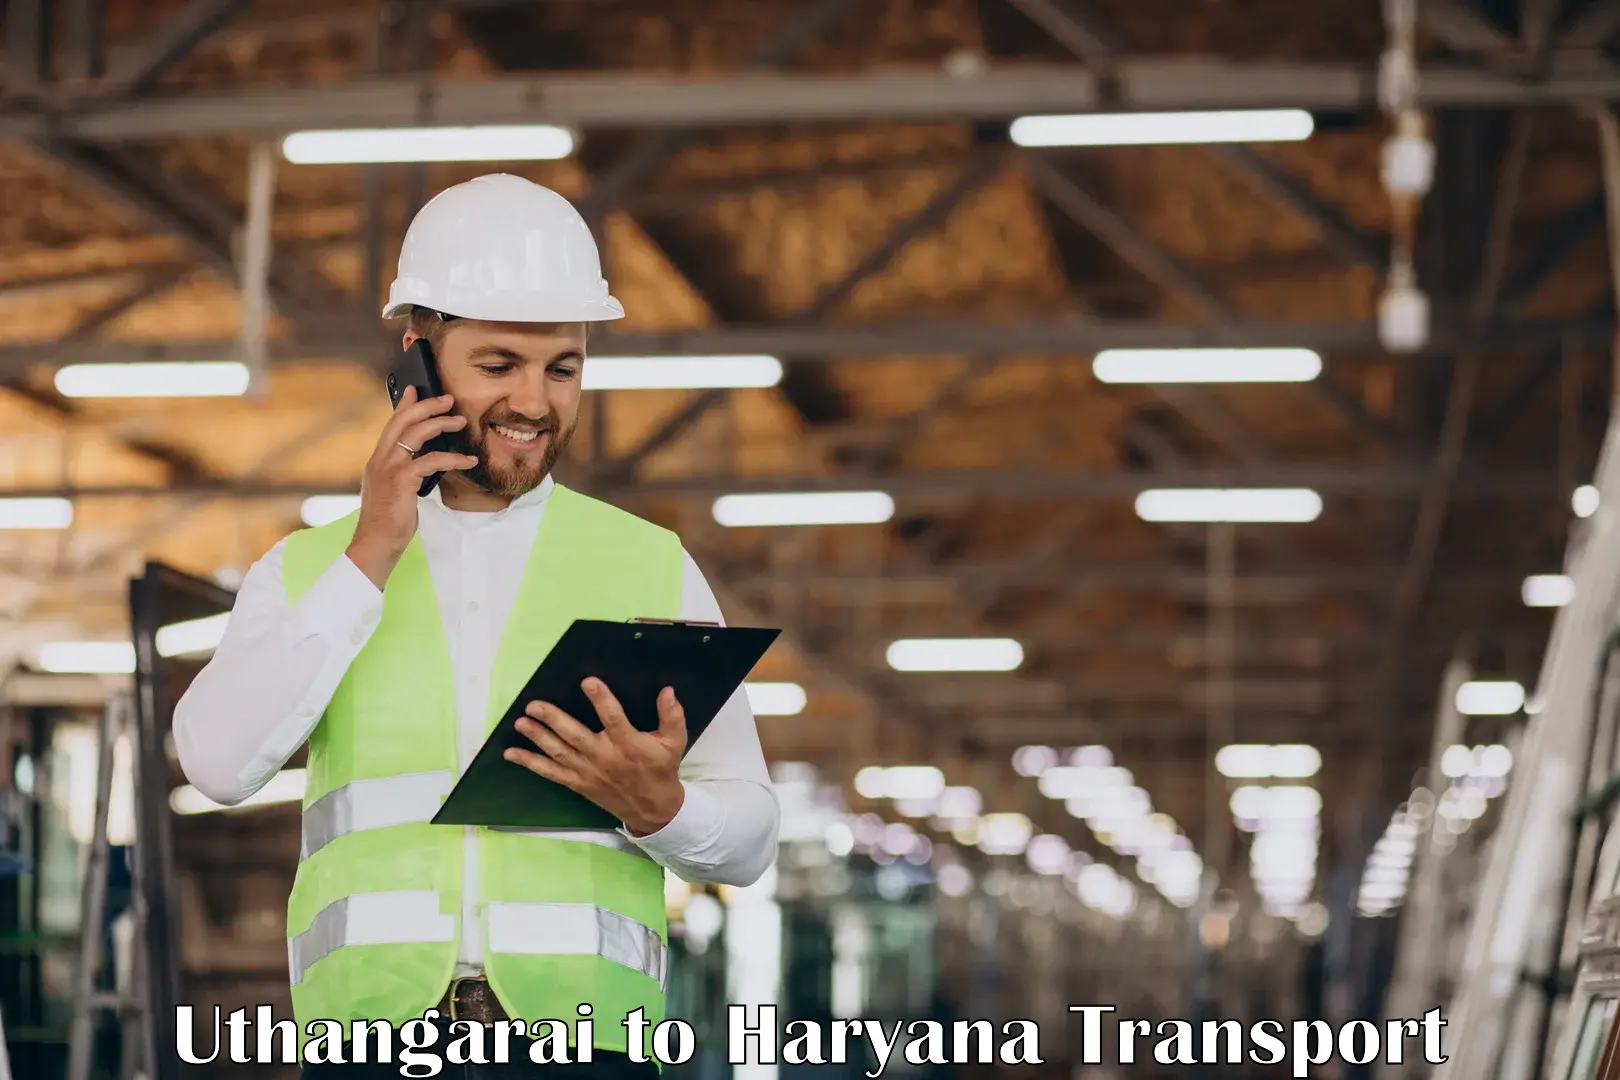 Delivery service Uthangarai to Haryana